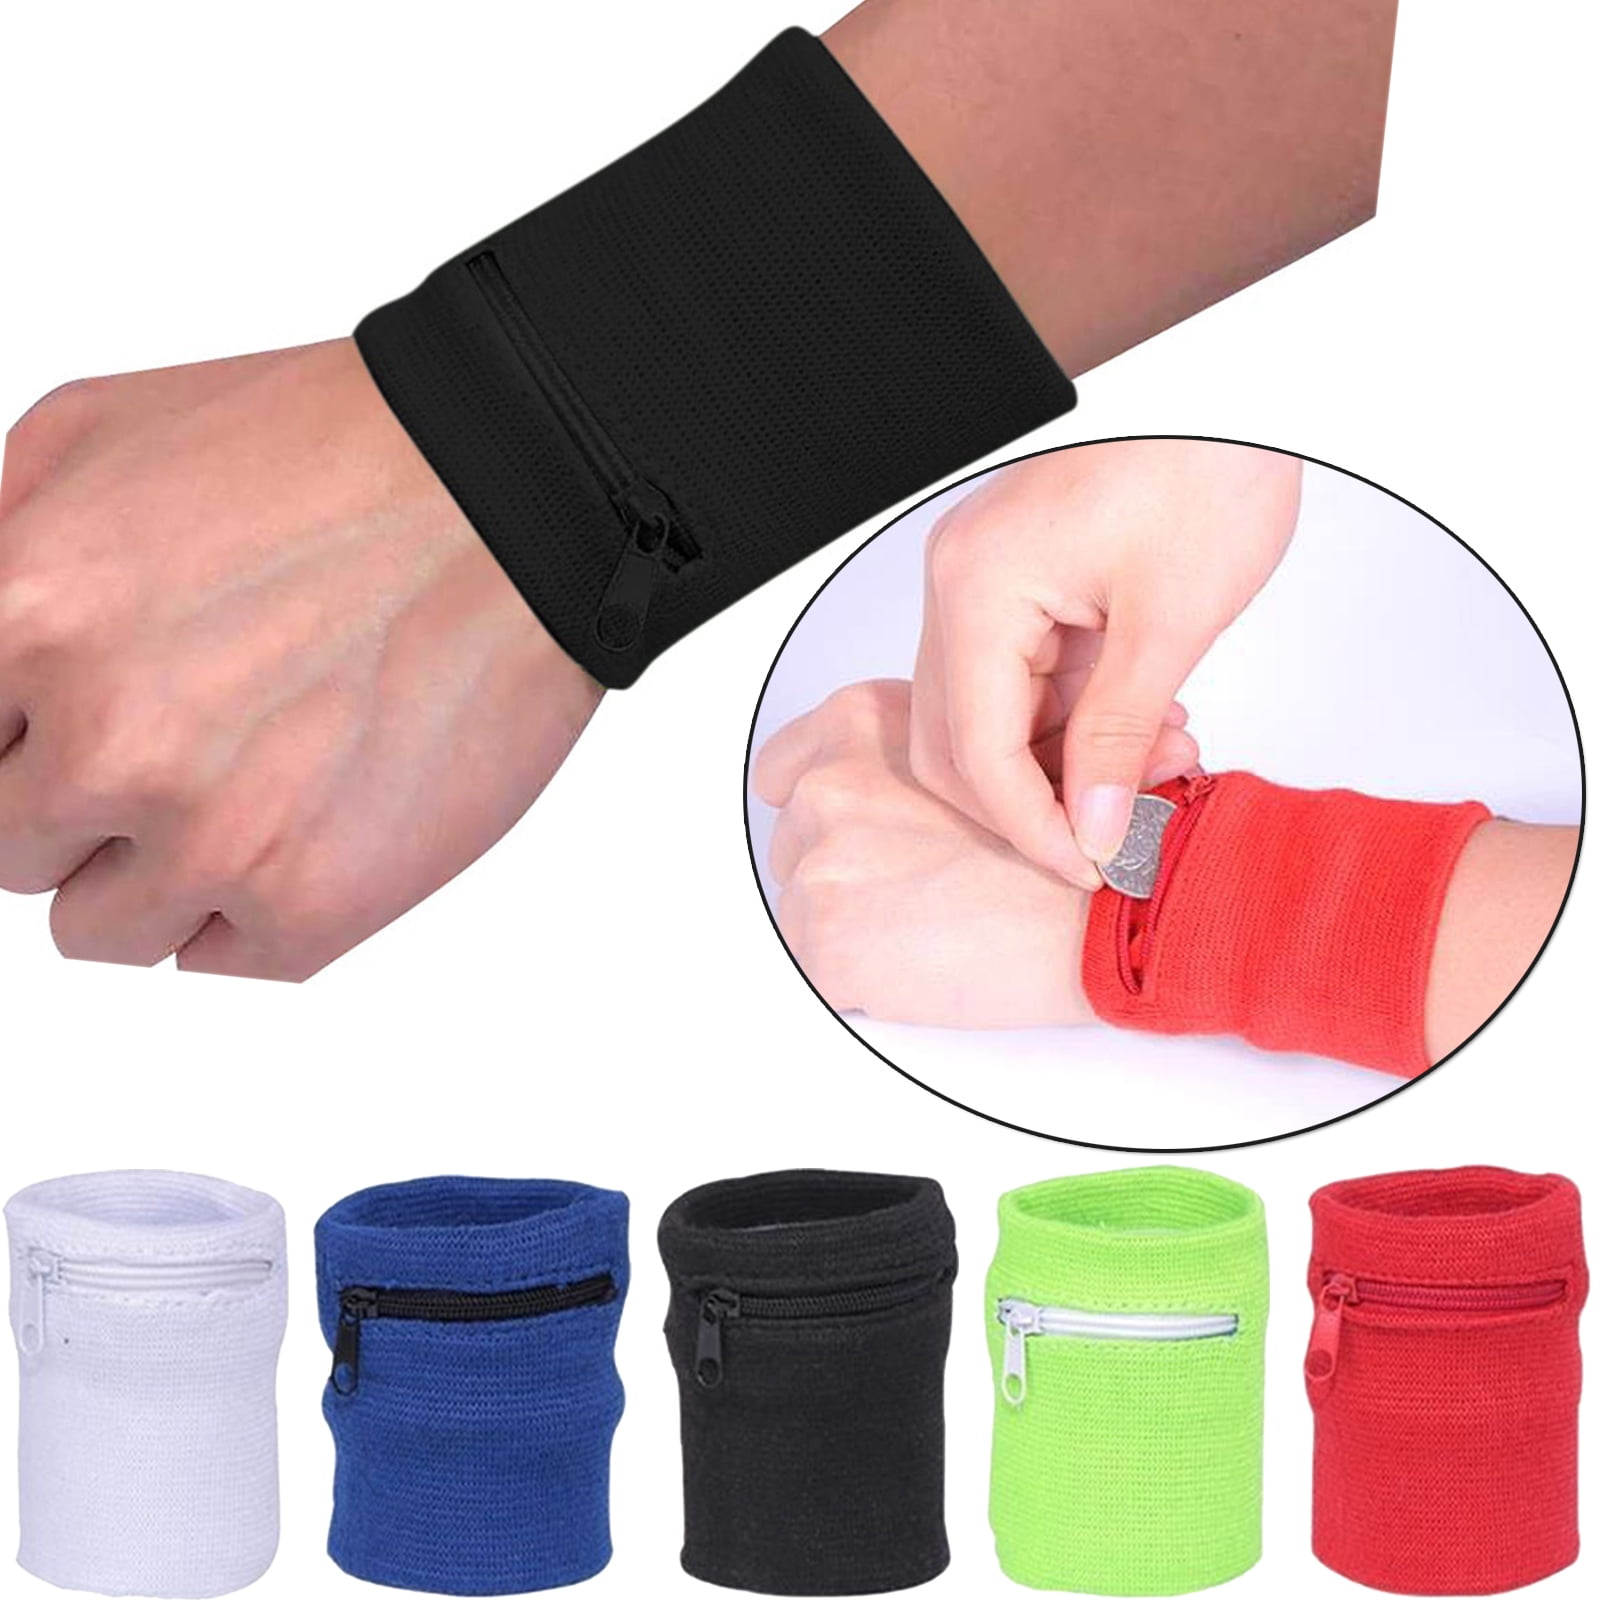 2x Cycling Running Sweatbands Wrist Wallet Sports Wristband w/ Zipper Pocket 